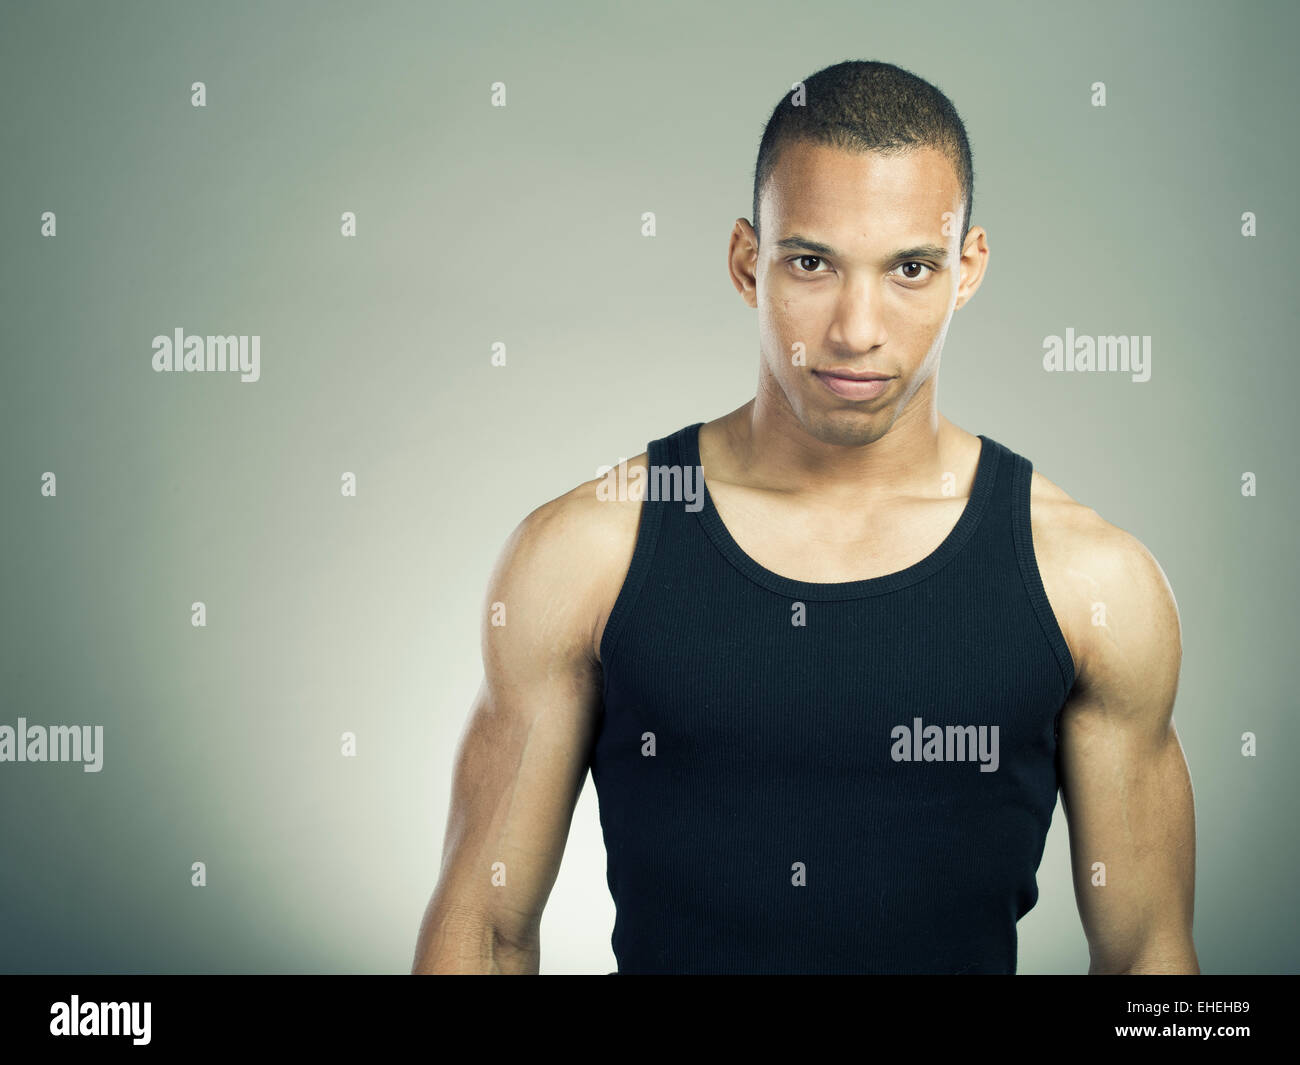 Muscular man wearing black tank top vest Stock Photo